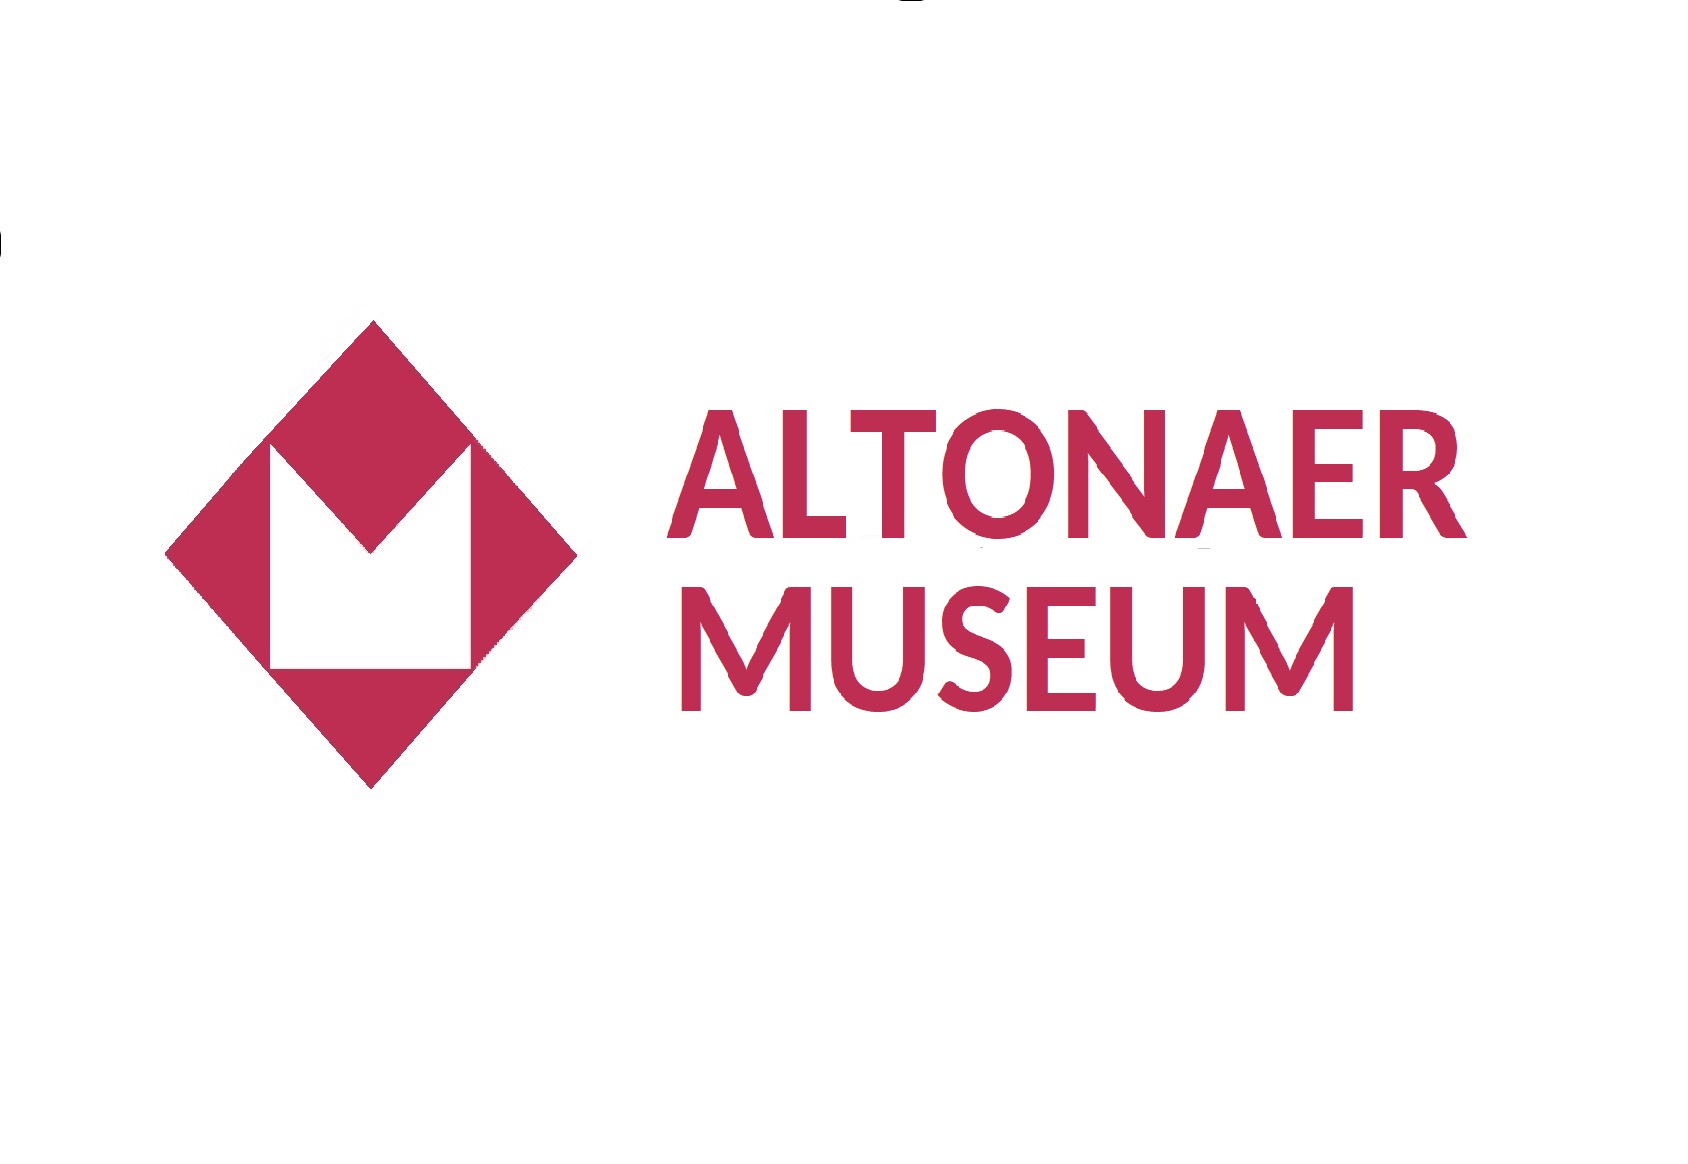 ALTONAER MUSEUM